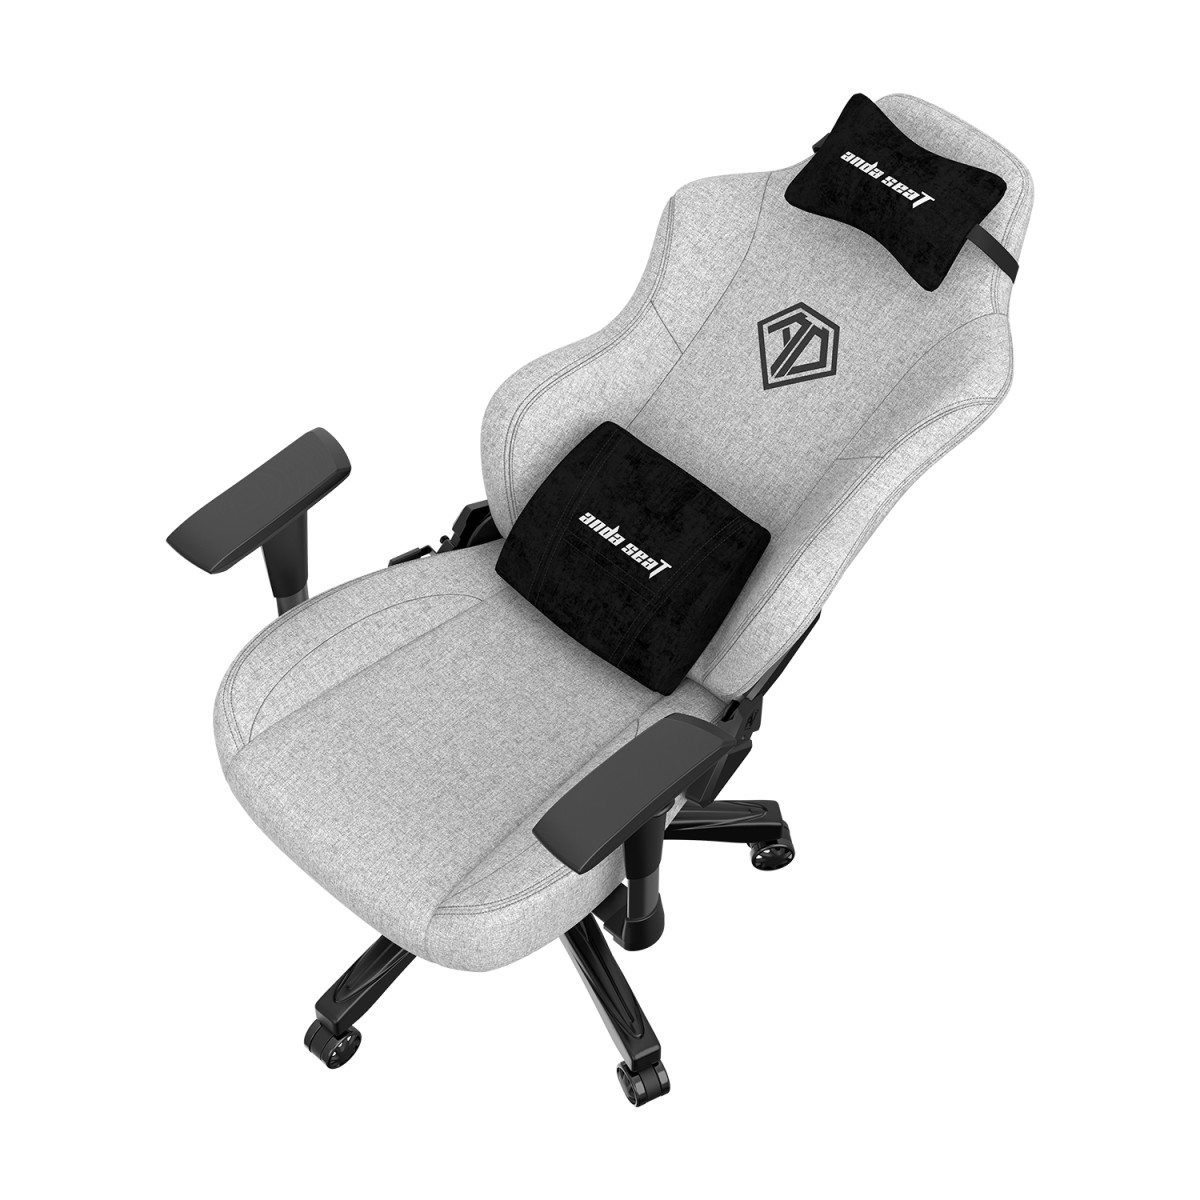 Phantom 3 Premium Gaming Chair Grey